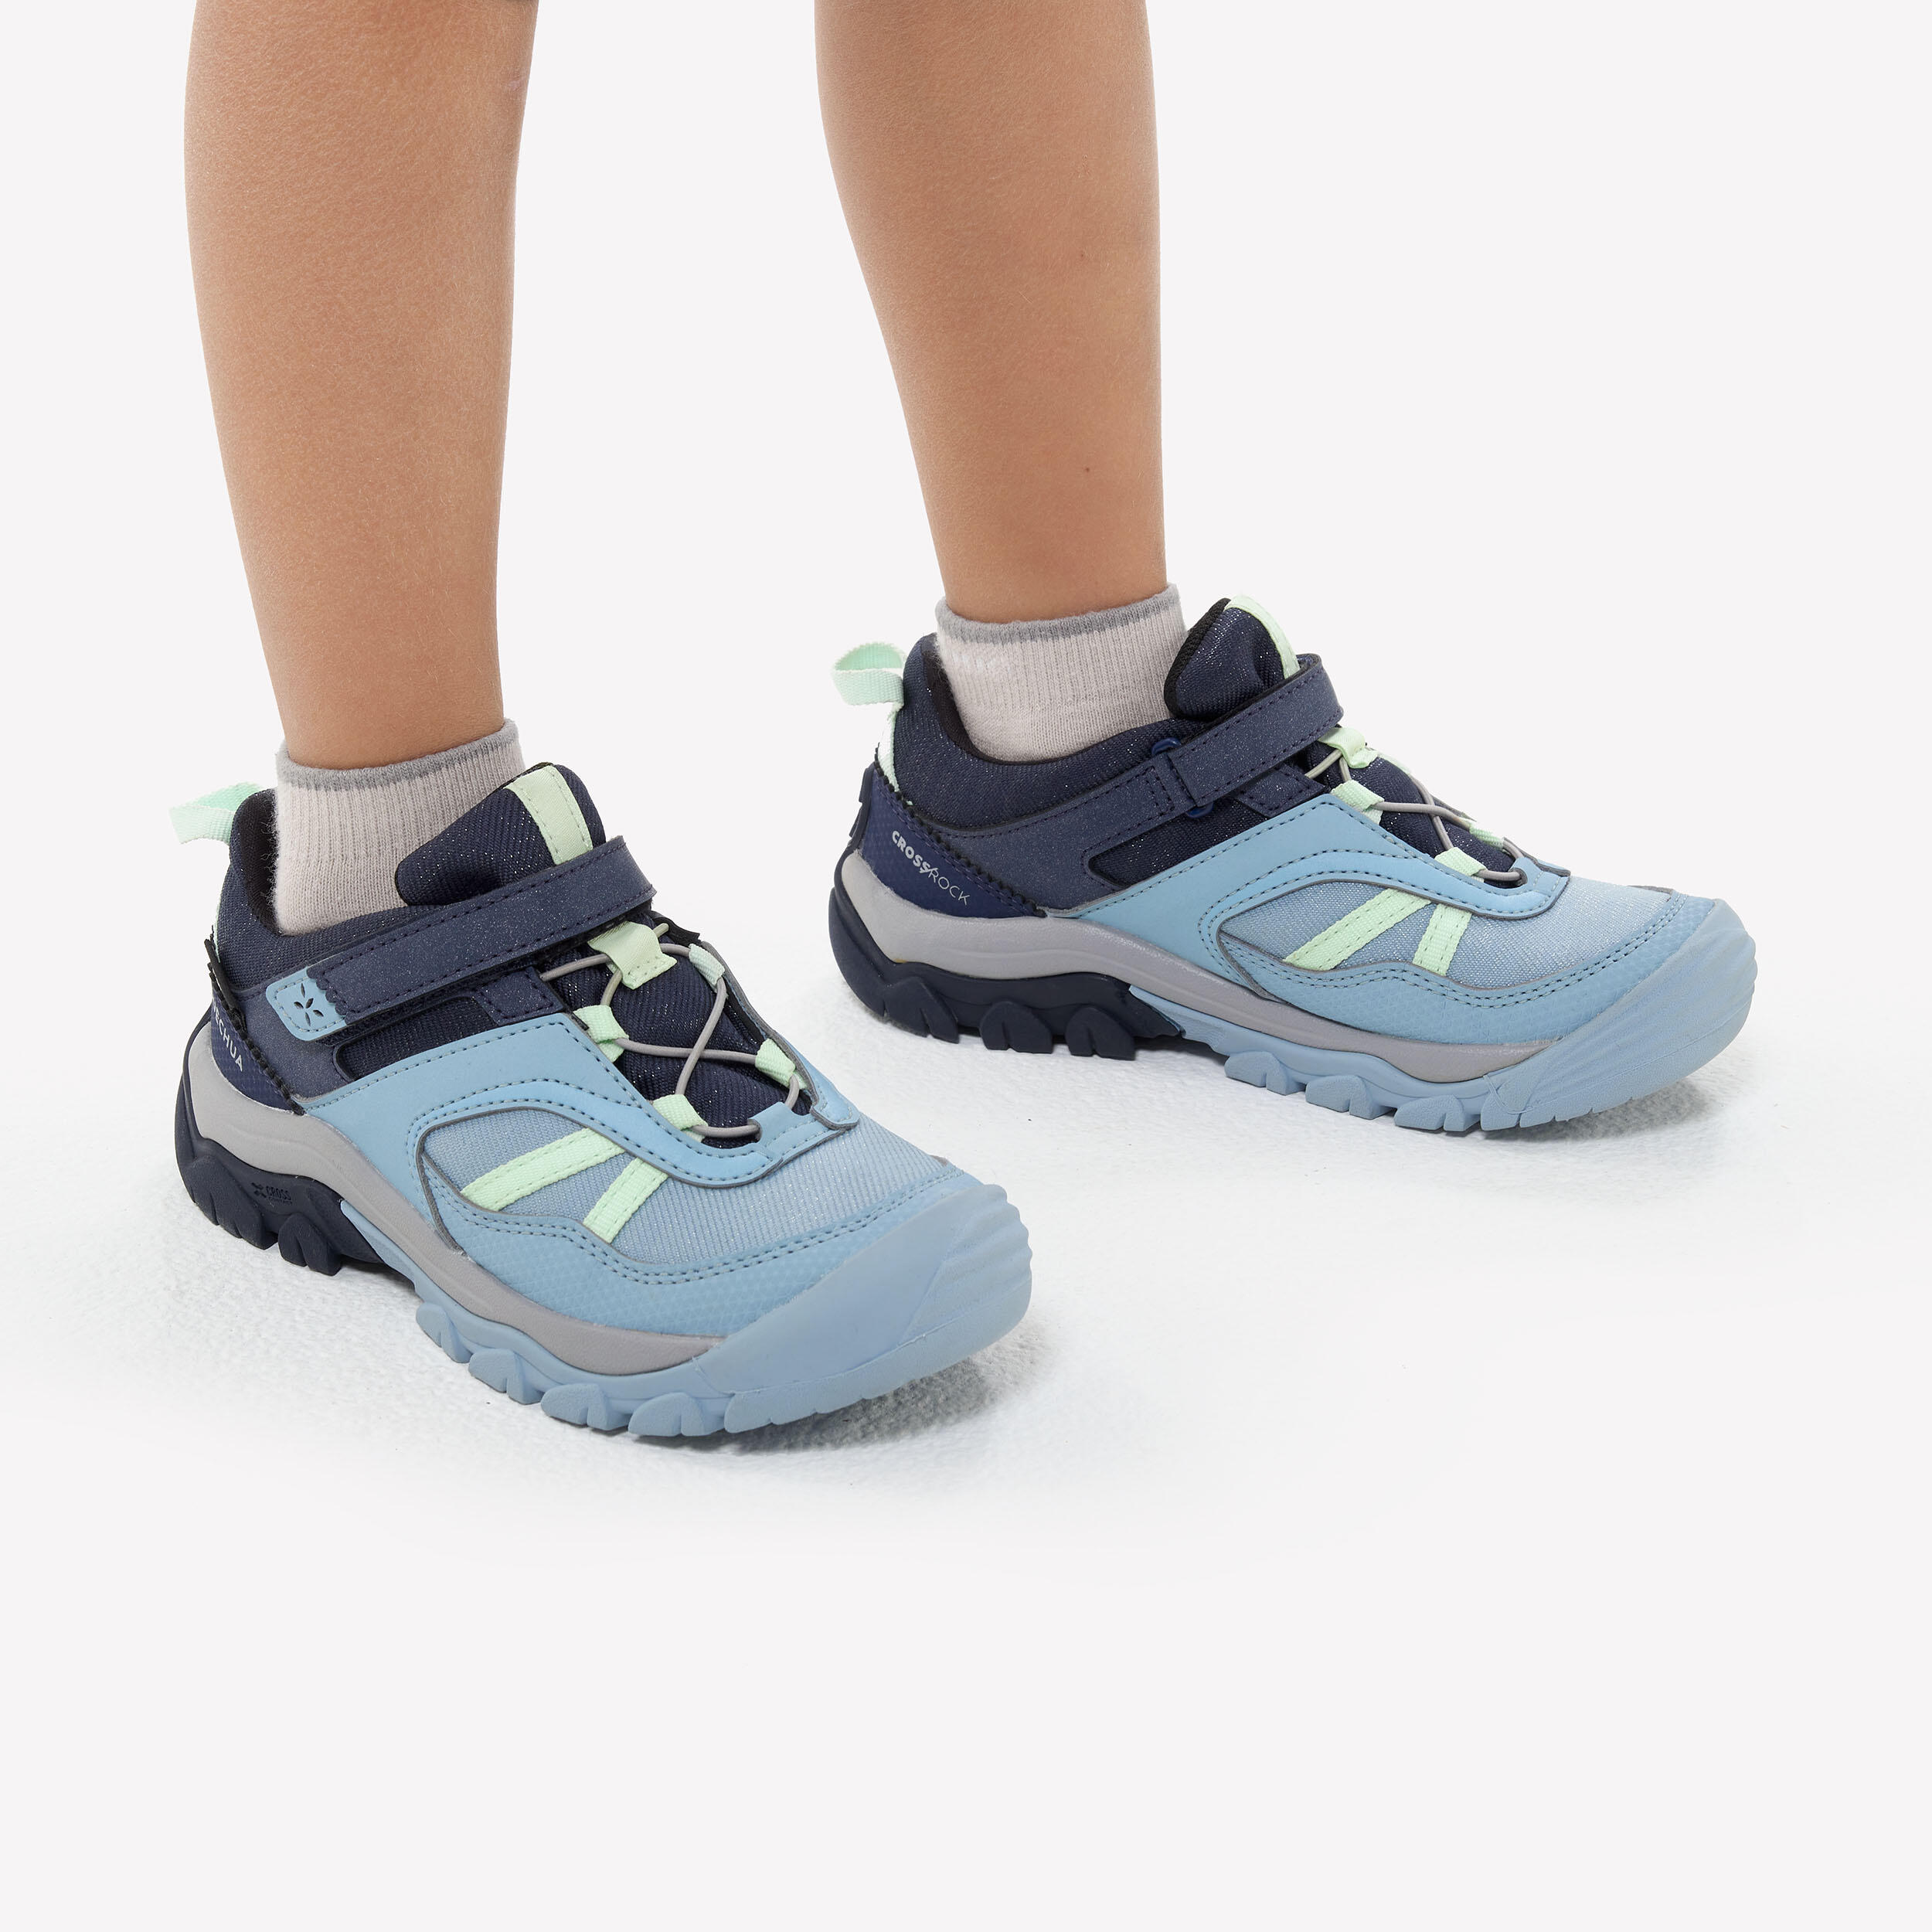 Children's Waterproof Hiking Boots - CROSSROCK light blue - 28–34 6/10